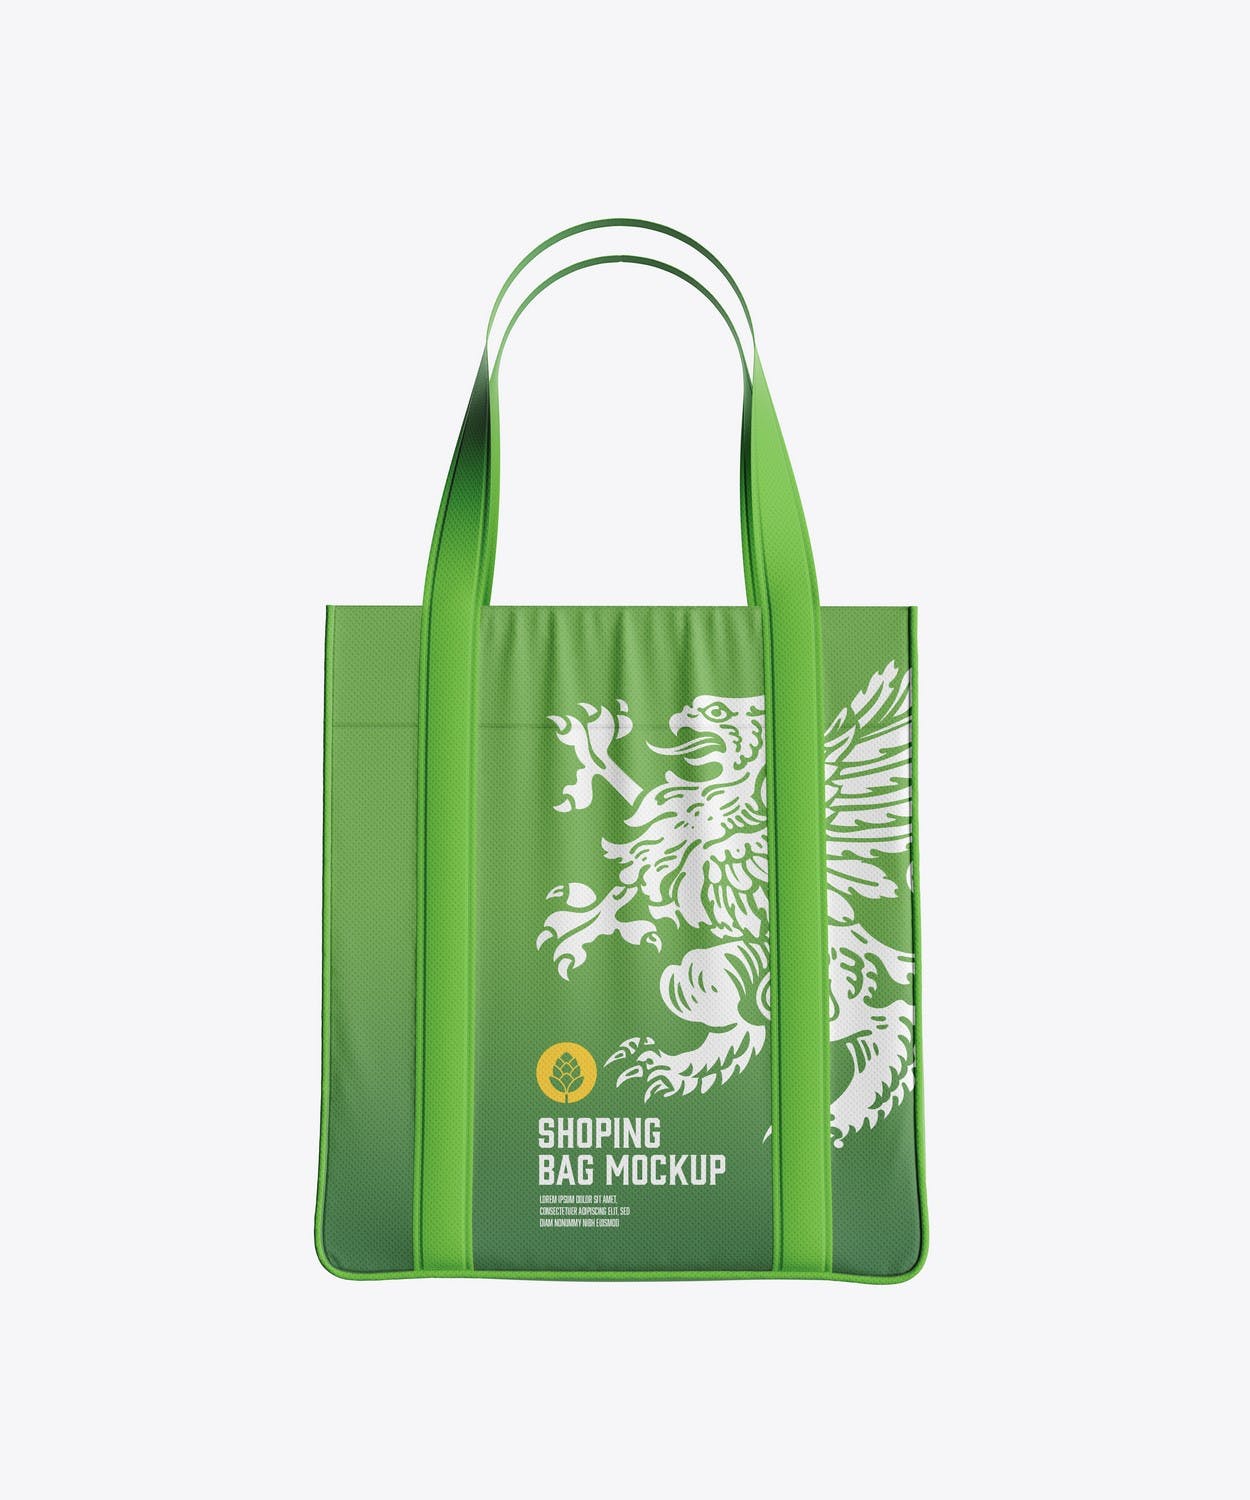 生态帆布袋包装Logo设计样机 Eco Canvas Bag Mockup 样机素材 第8张